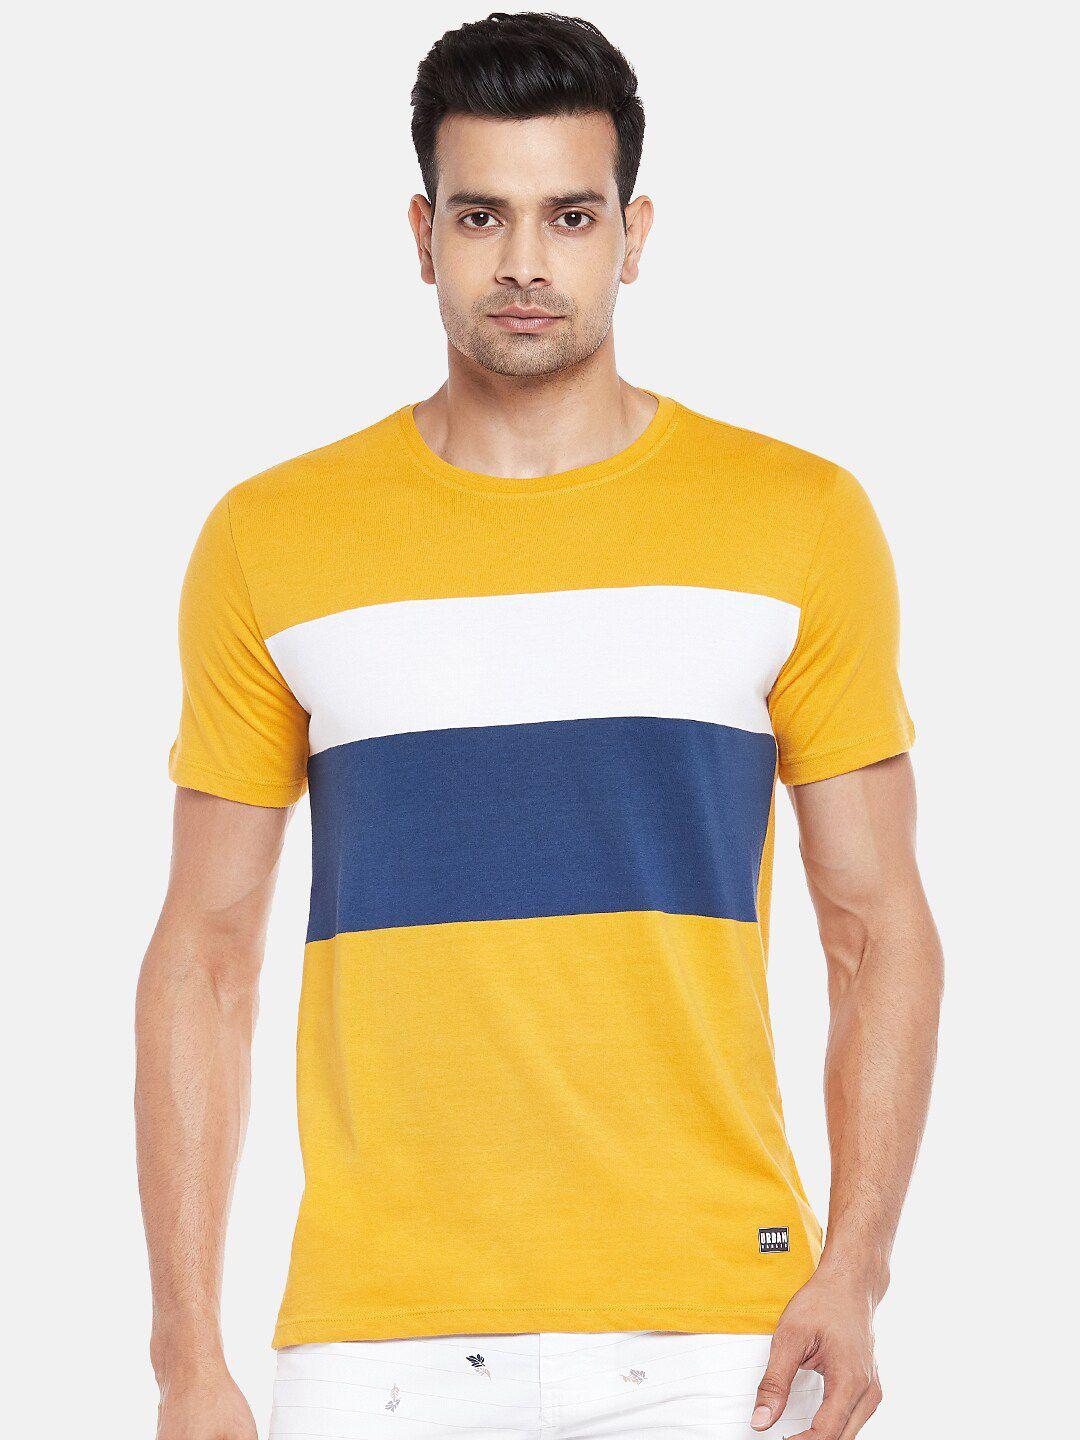 urban ranger by pantaloons men mustard yellow & blue colourblocked slim fit t-shirt